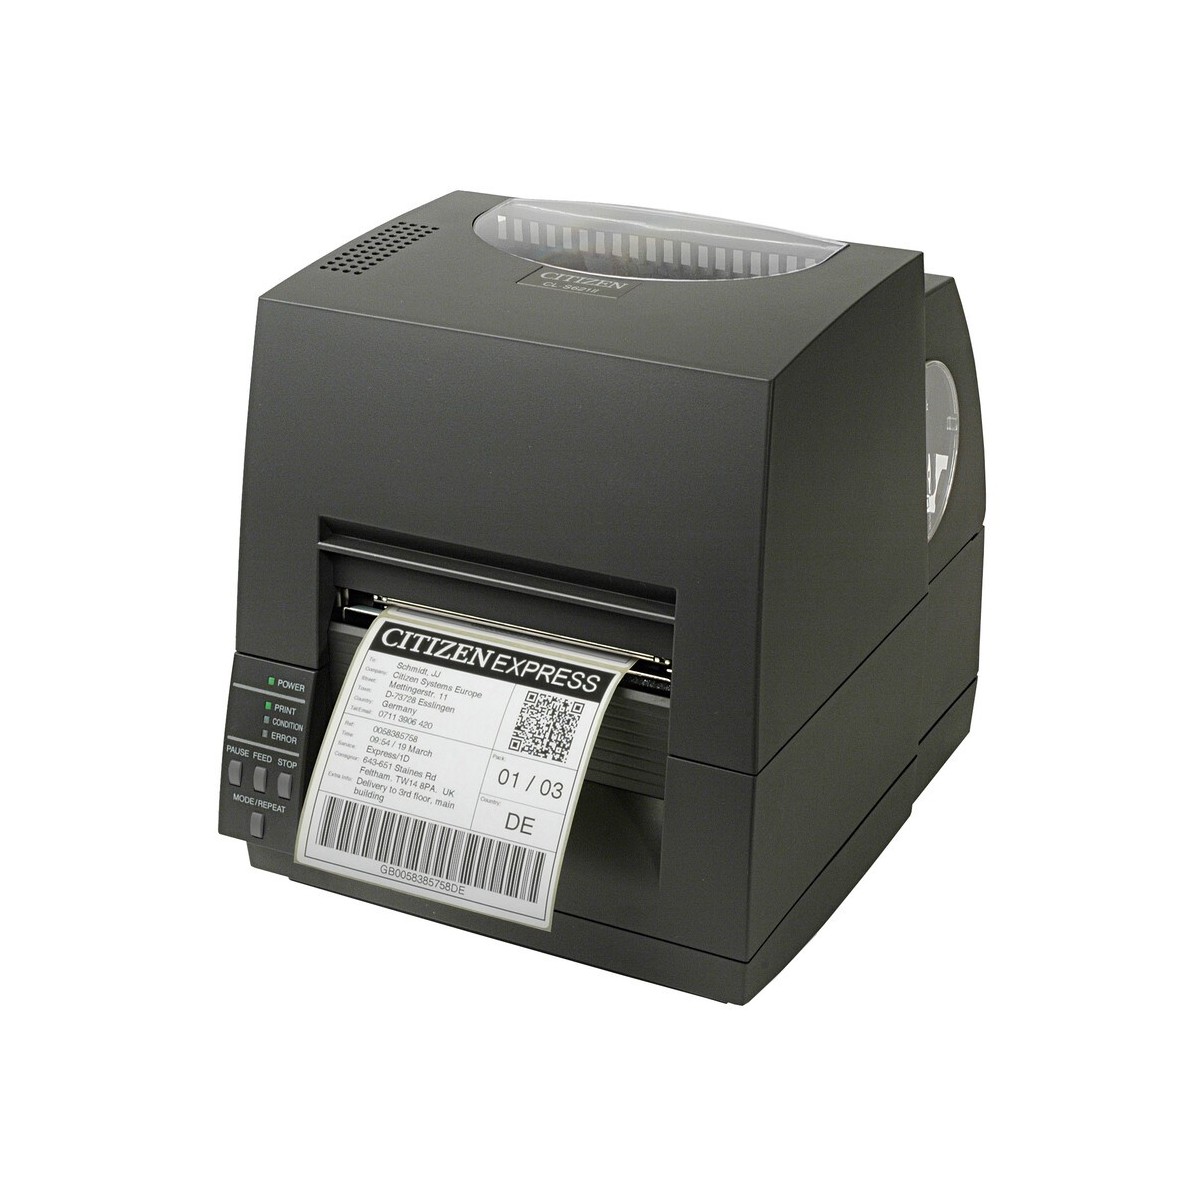 Citizen CL-S621II - Direct thermal / Thermal transfer - POS printer - 203 x 203 DPI - 150 mm/sec - 254 µm - 20 cm